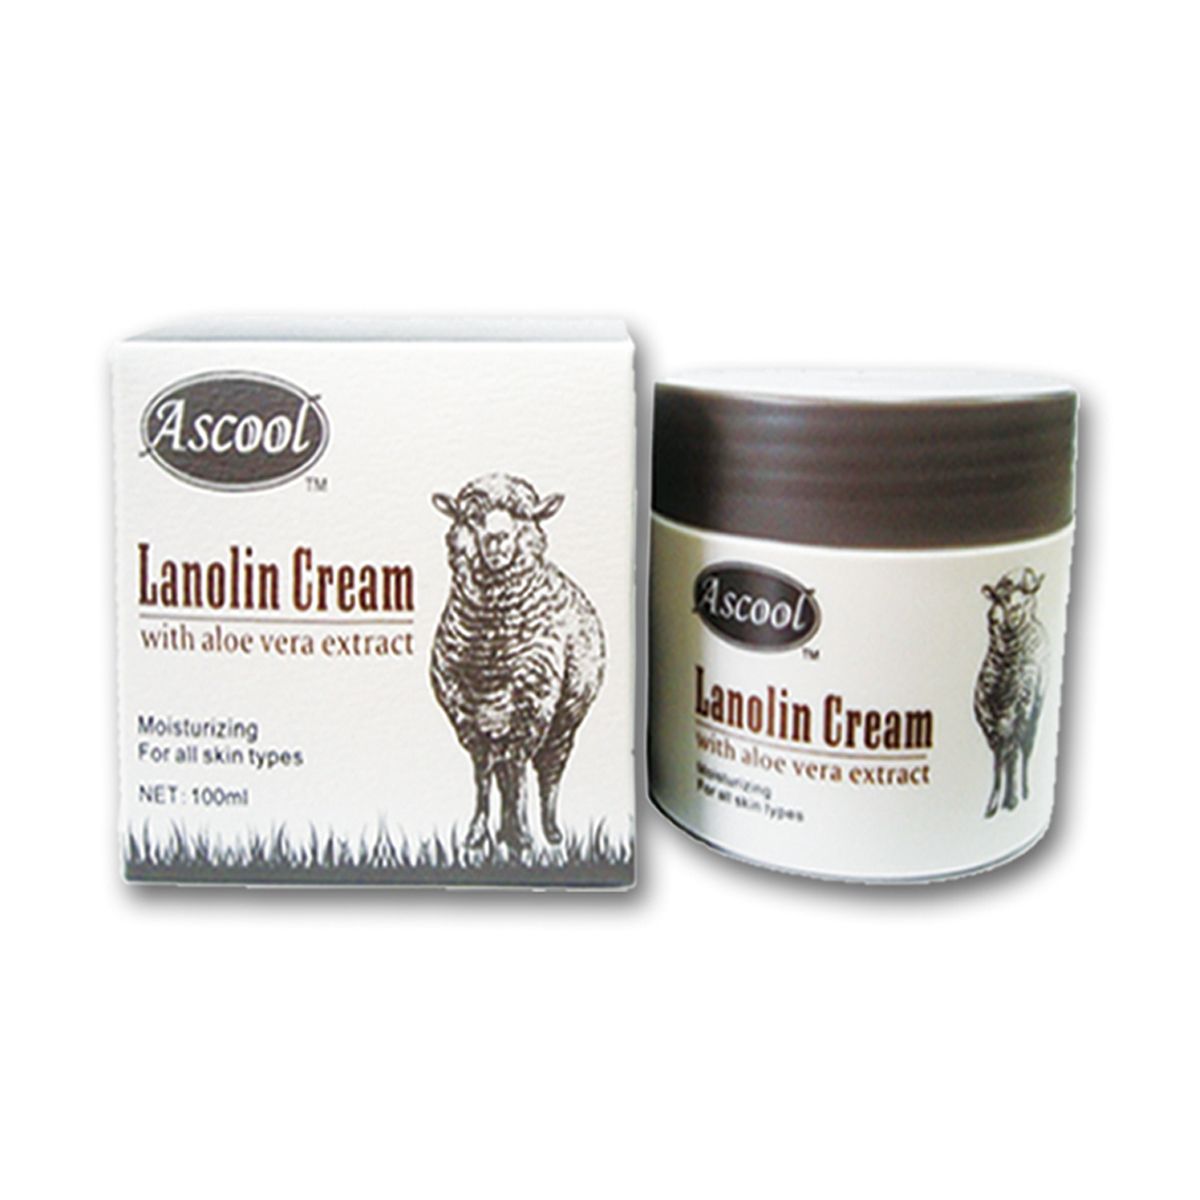 Lanolin Cream with Aloe Vera